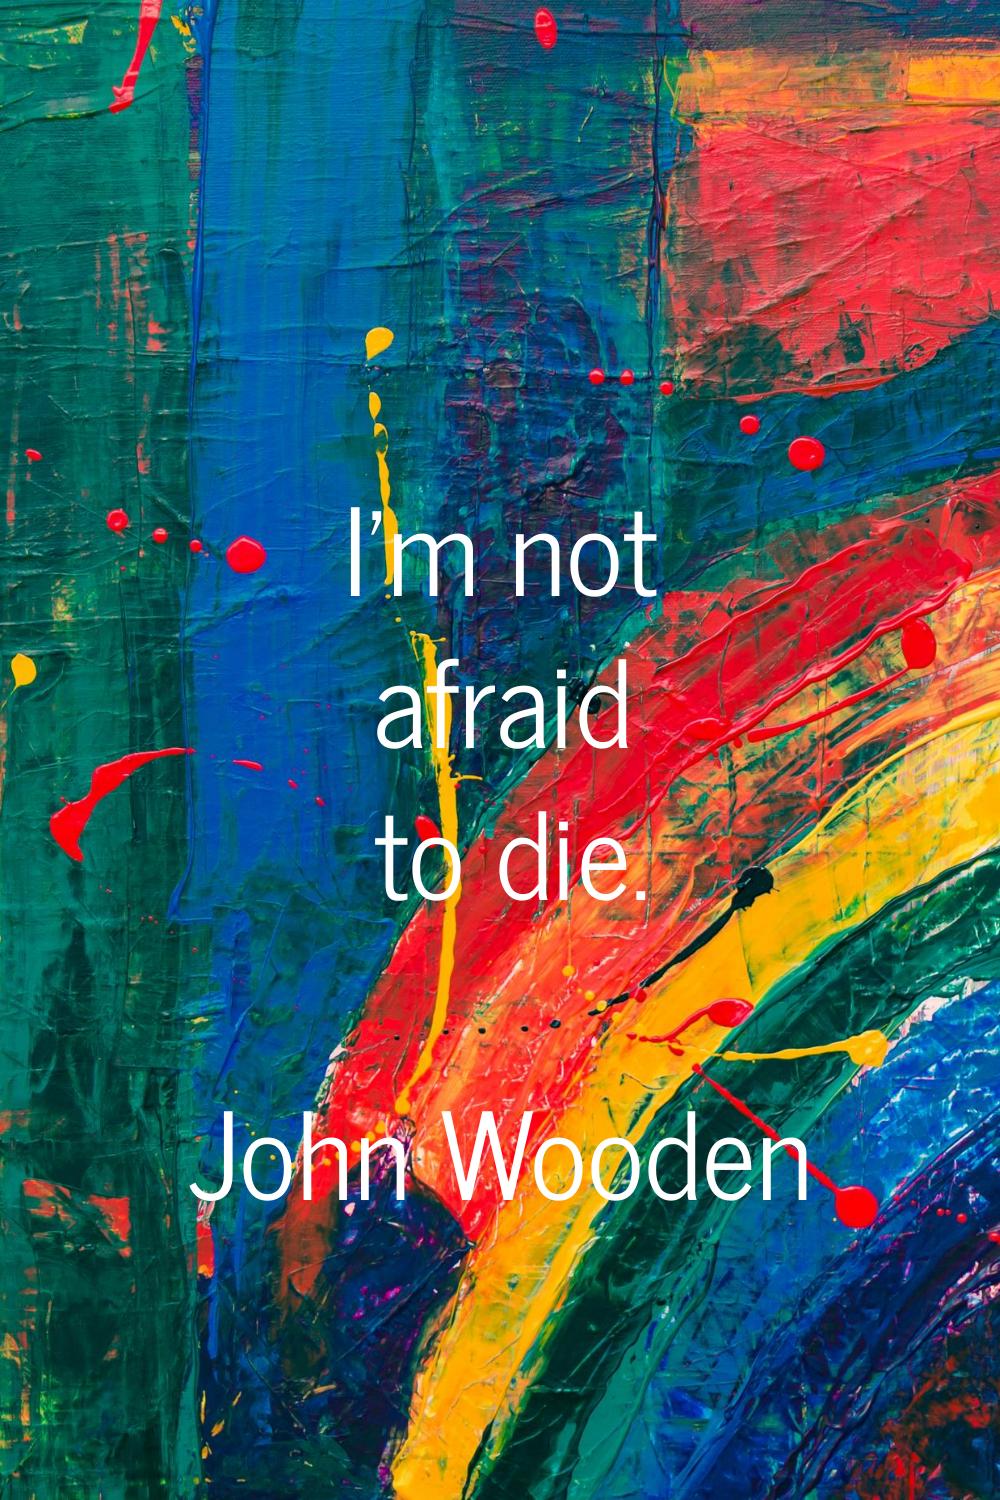 I'm not afraid to die.